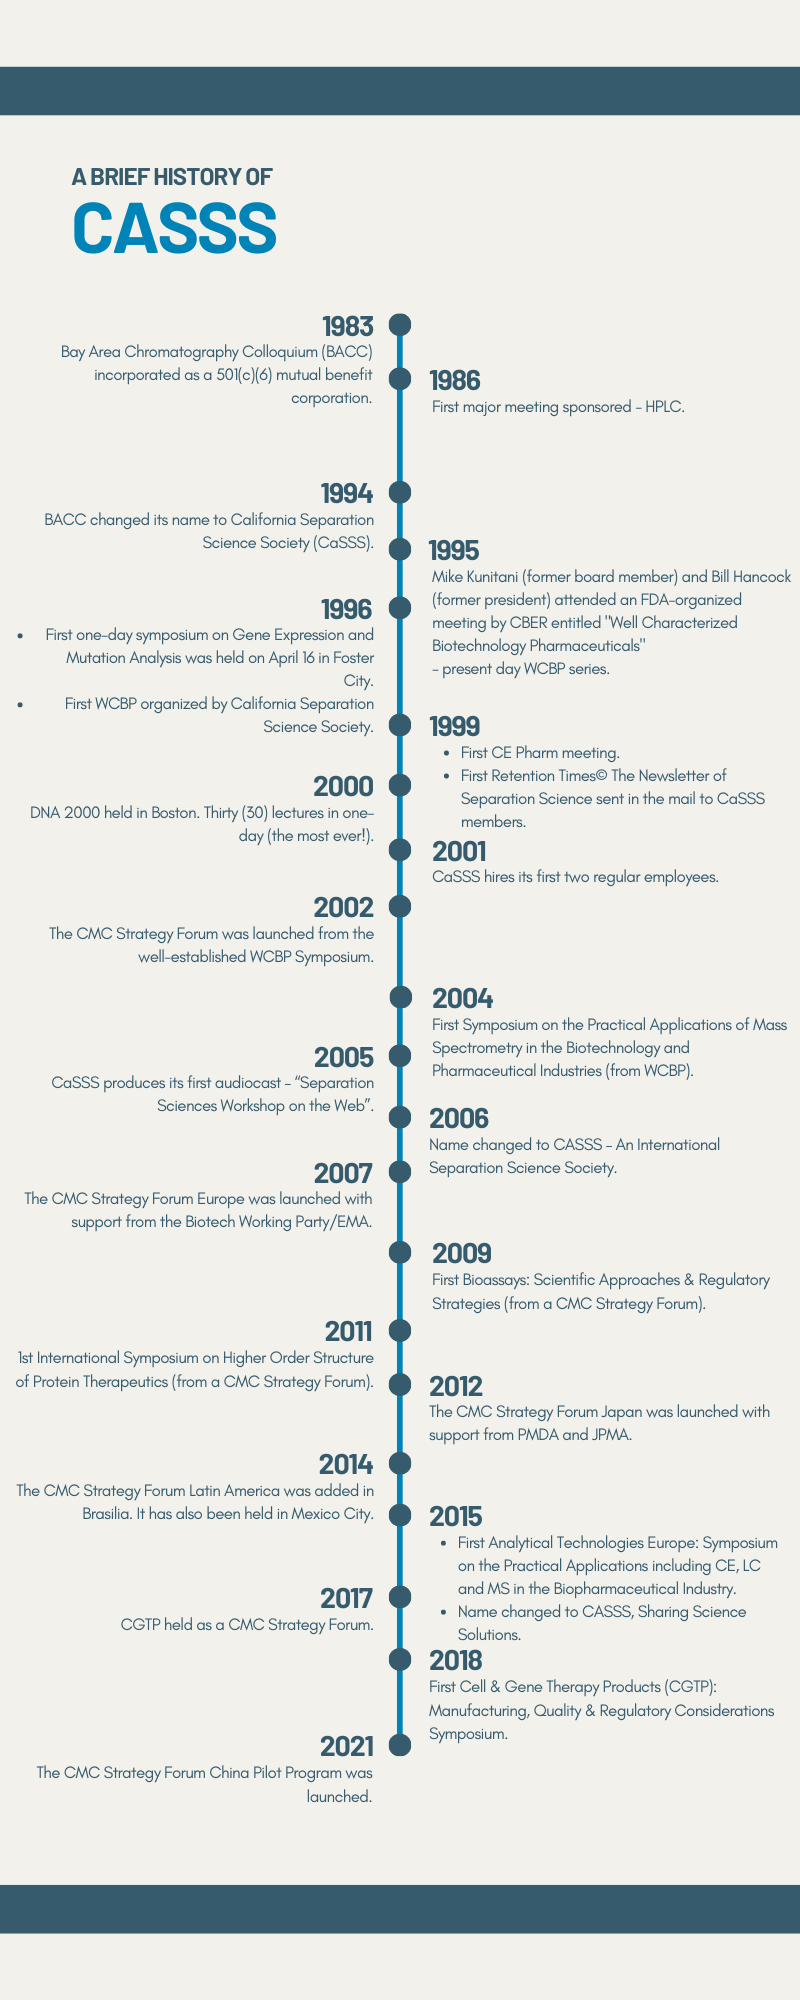 image of CASSS history timeline